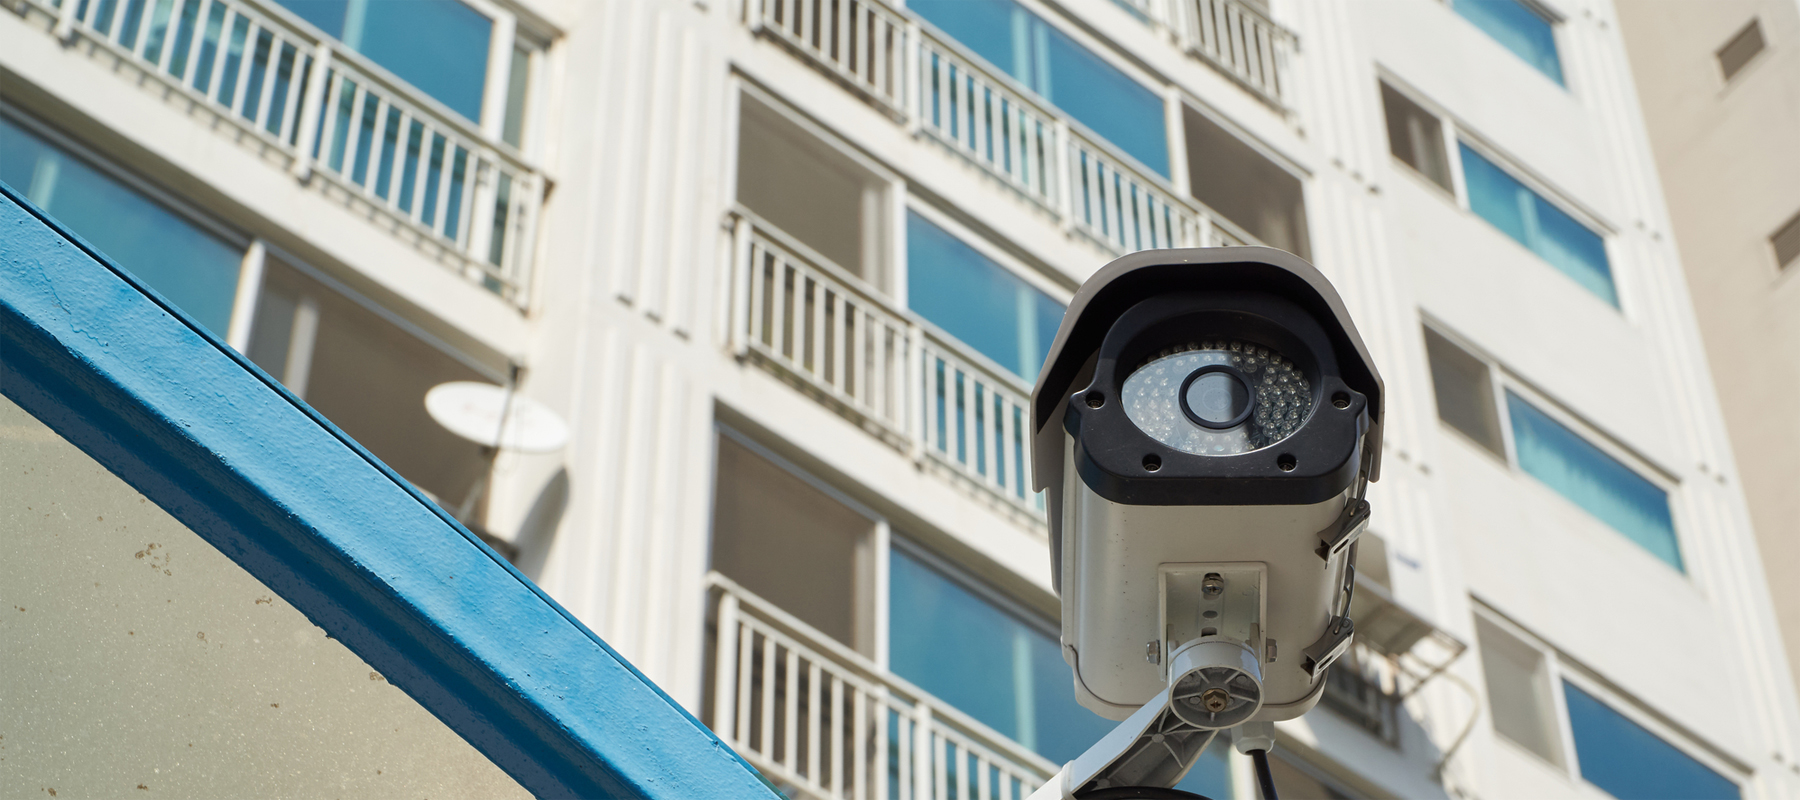 Video Surveillance at an Apartment Building